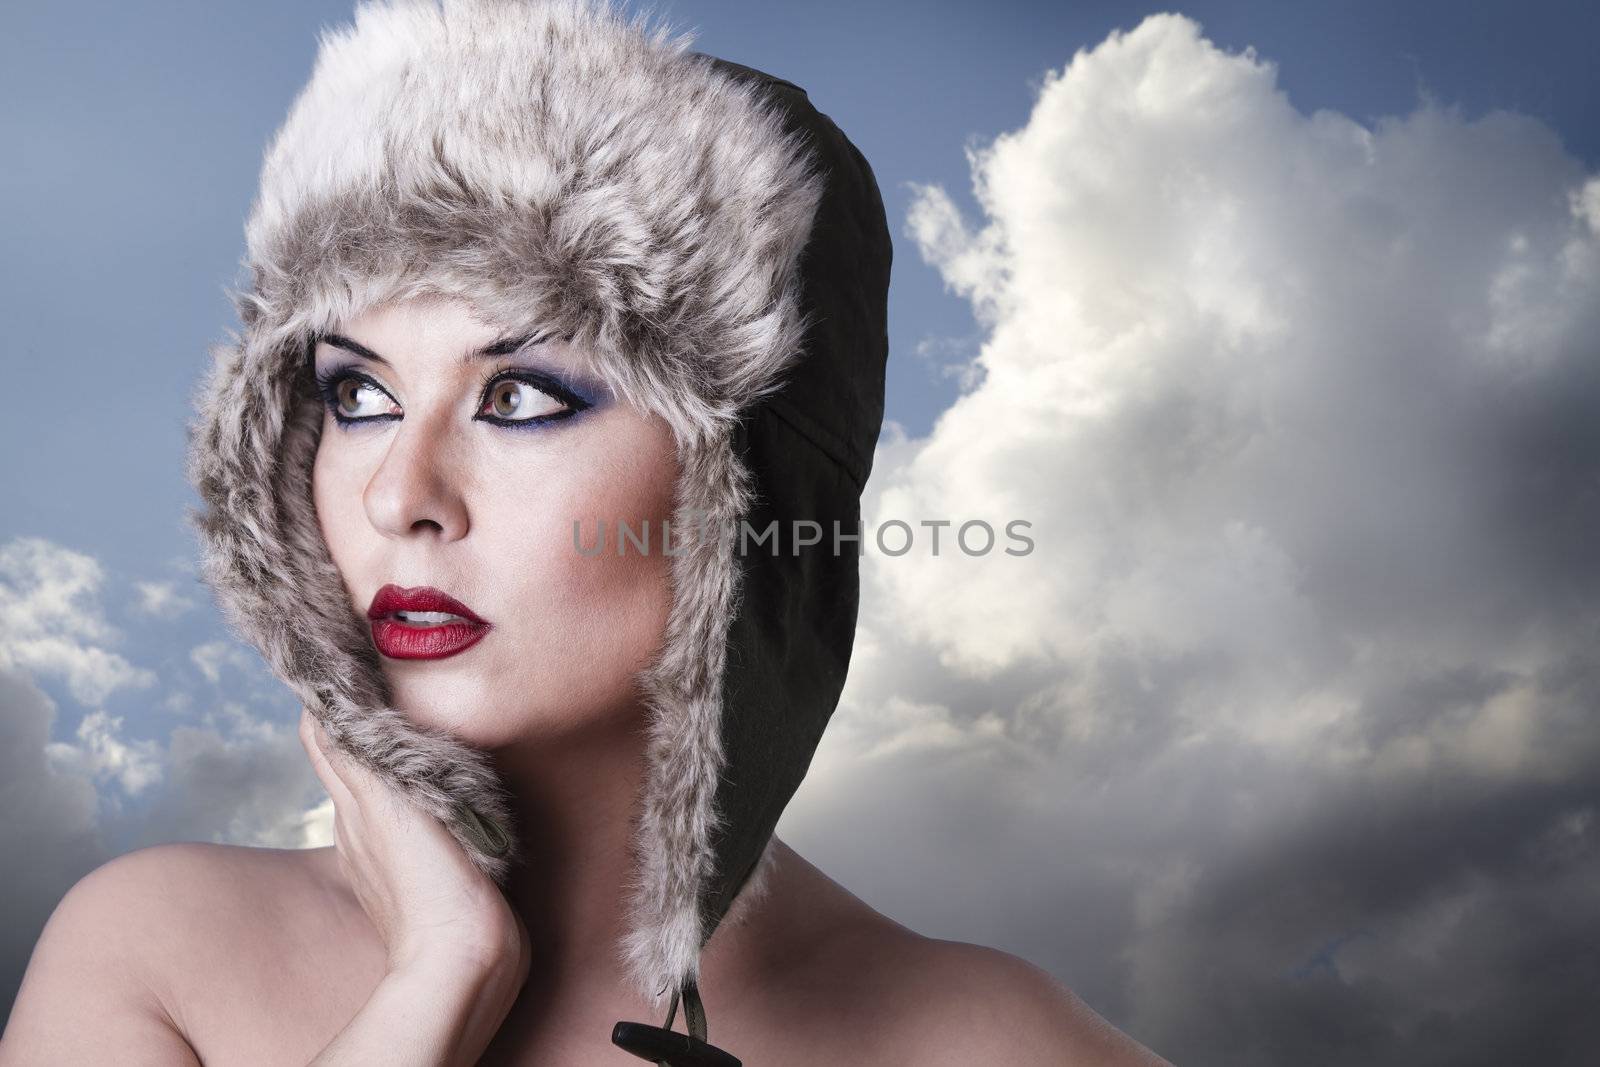 cold winter queen by FernandoCortes